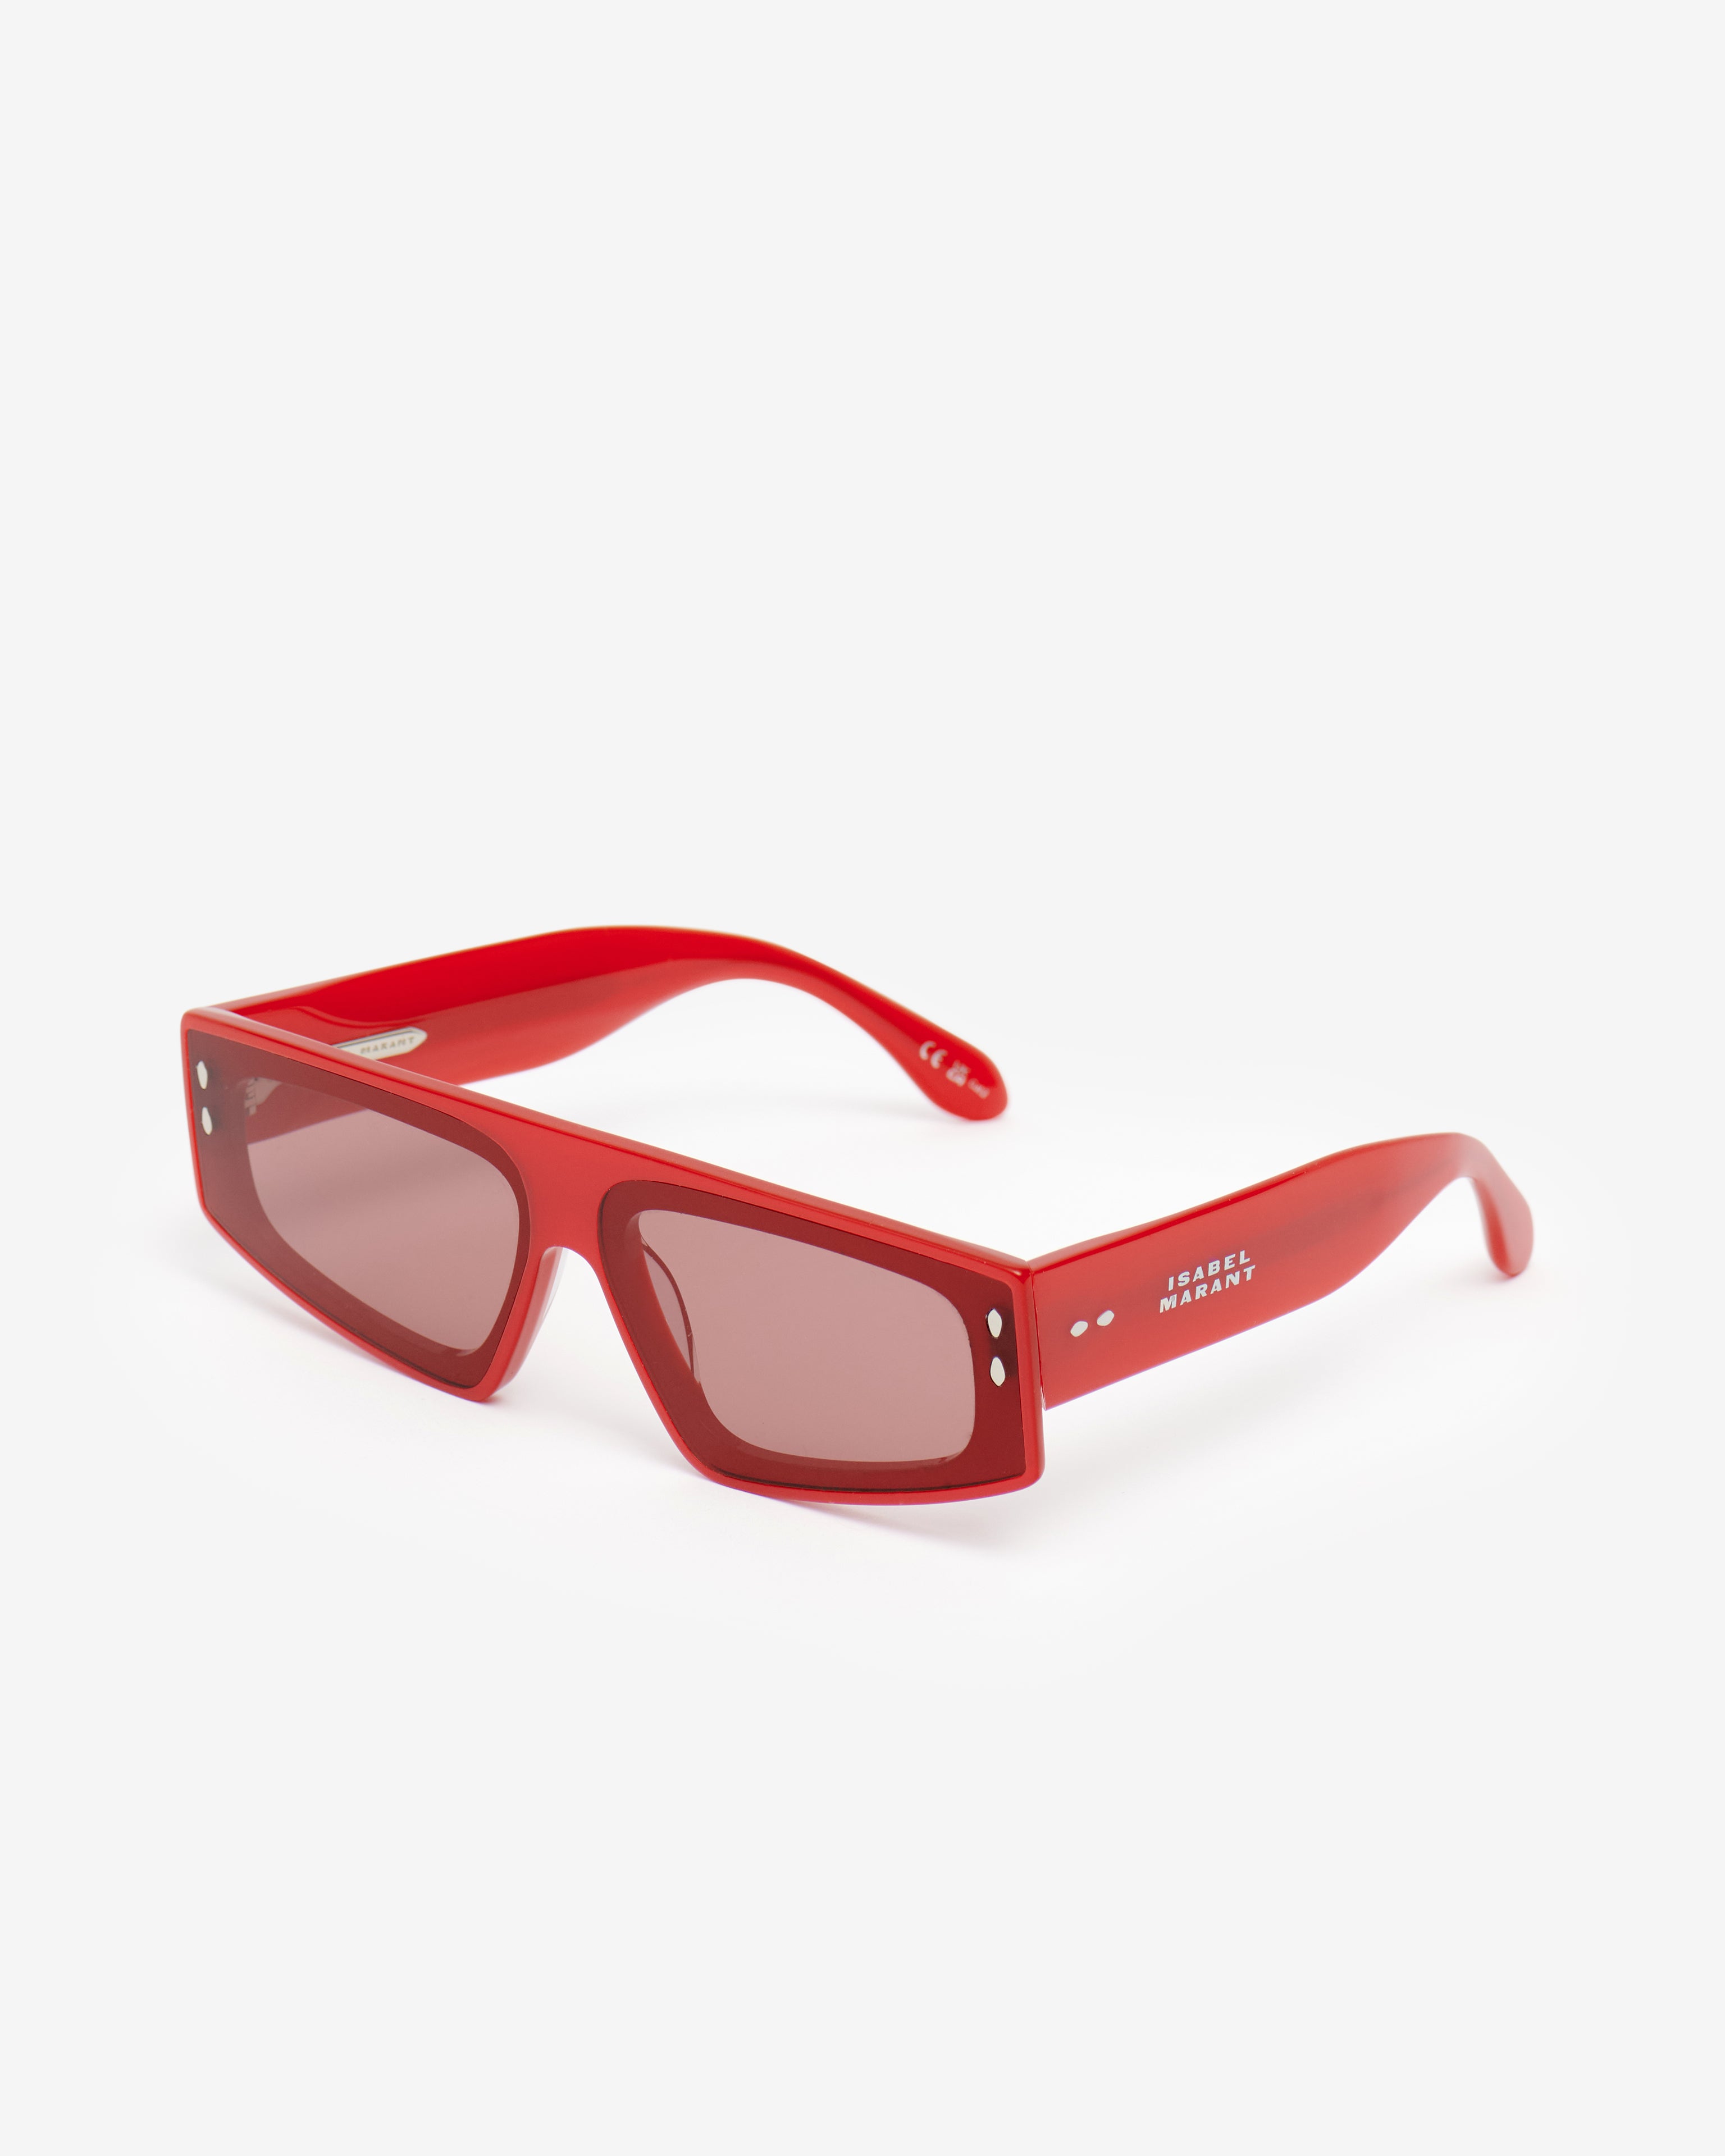 Zoomy sunglasses Woman Pearled red-burgundy 3